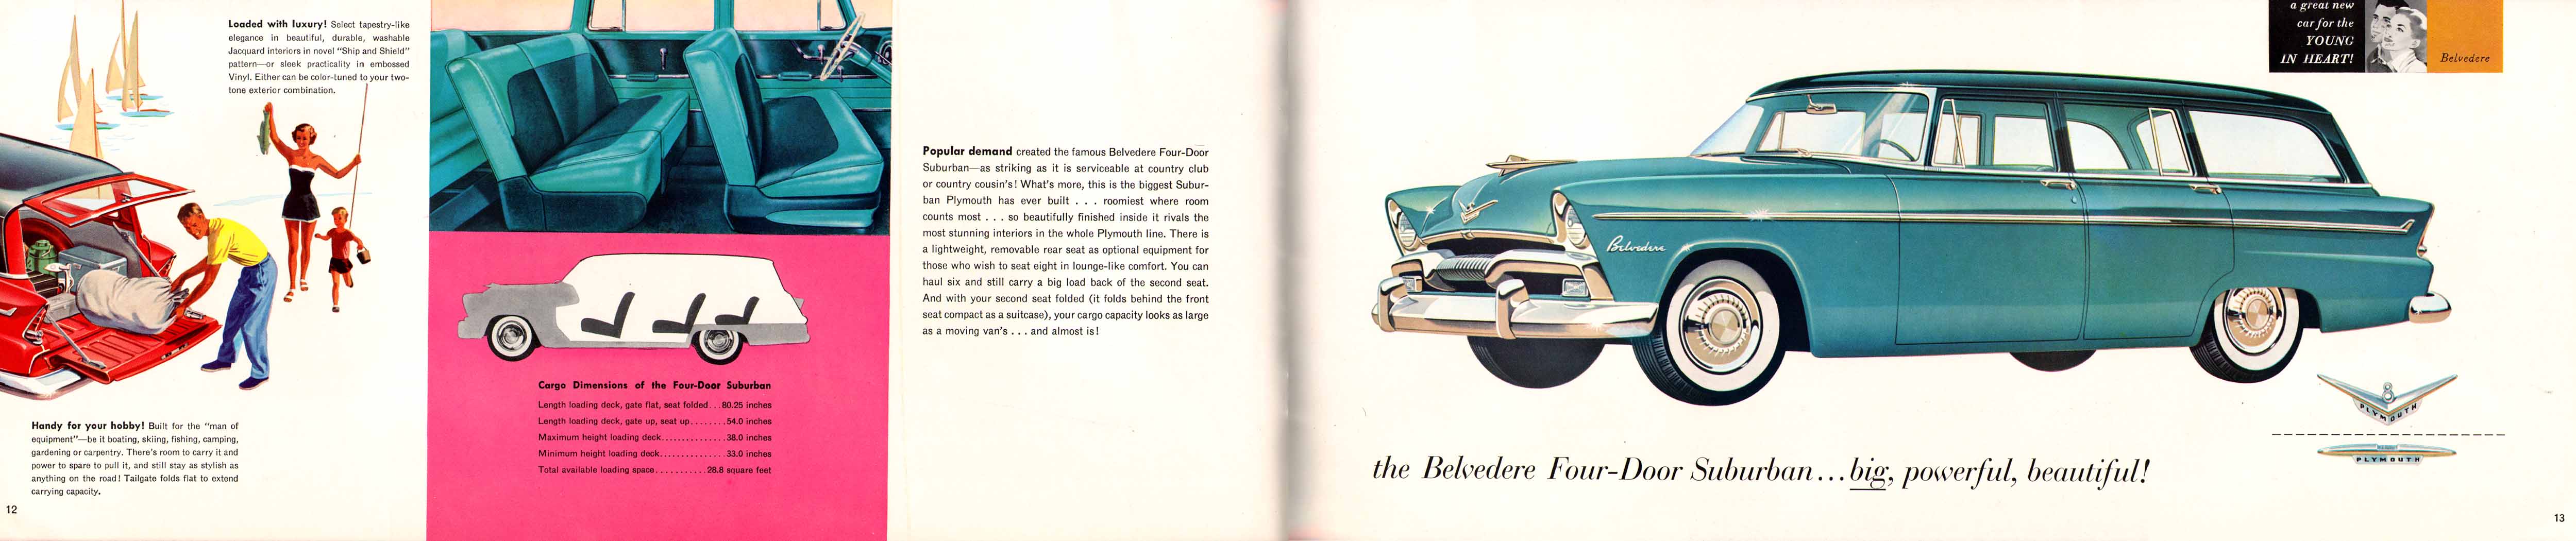 1955_Plymouth_Prestige-12-13